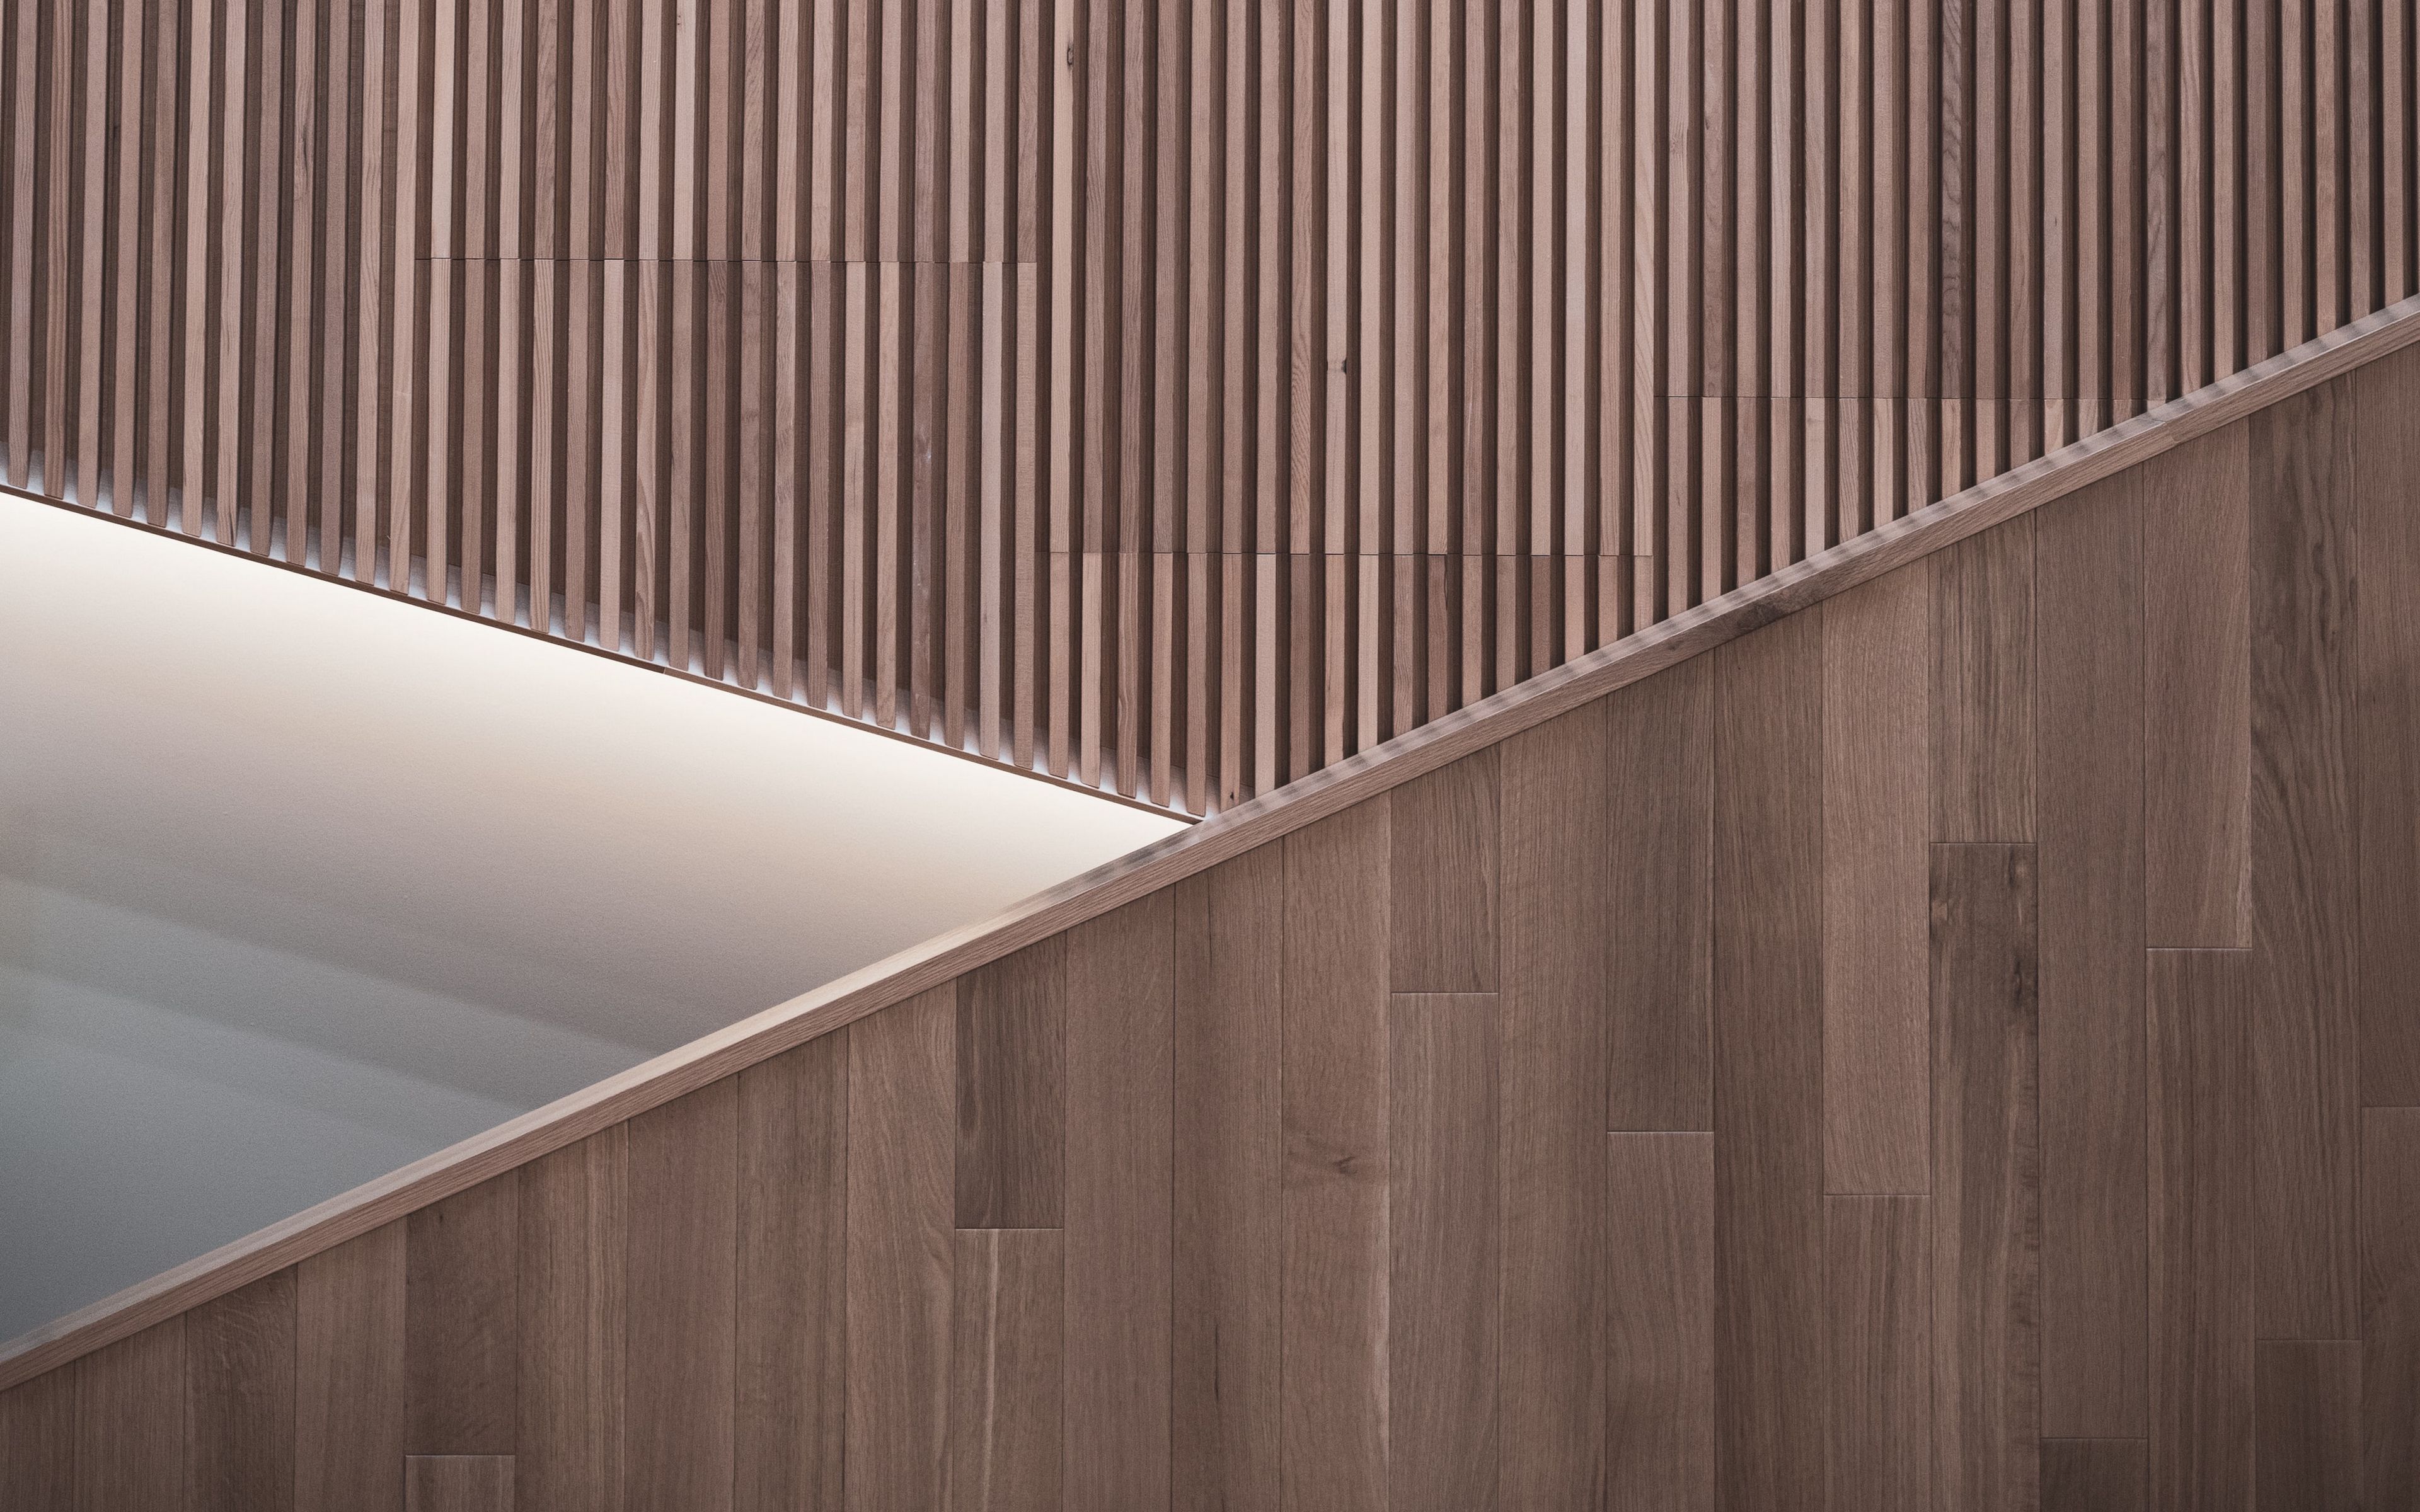 Download Wallpaper 3840x2400 Architecture Stripes Wood Texture 4k